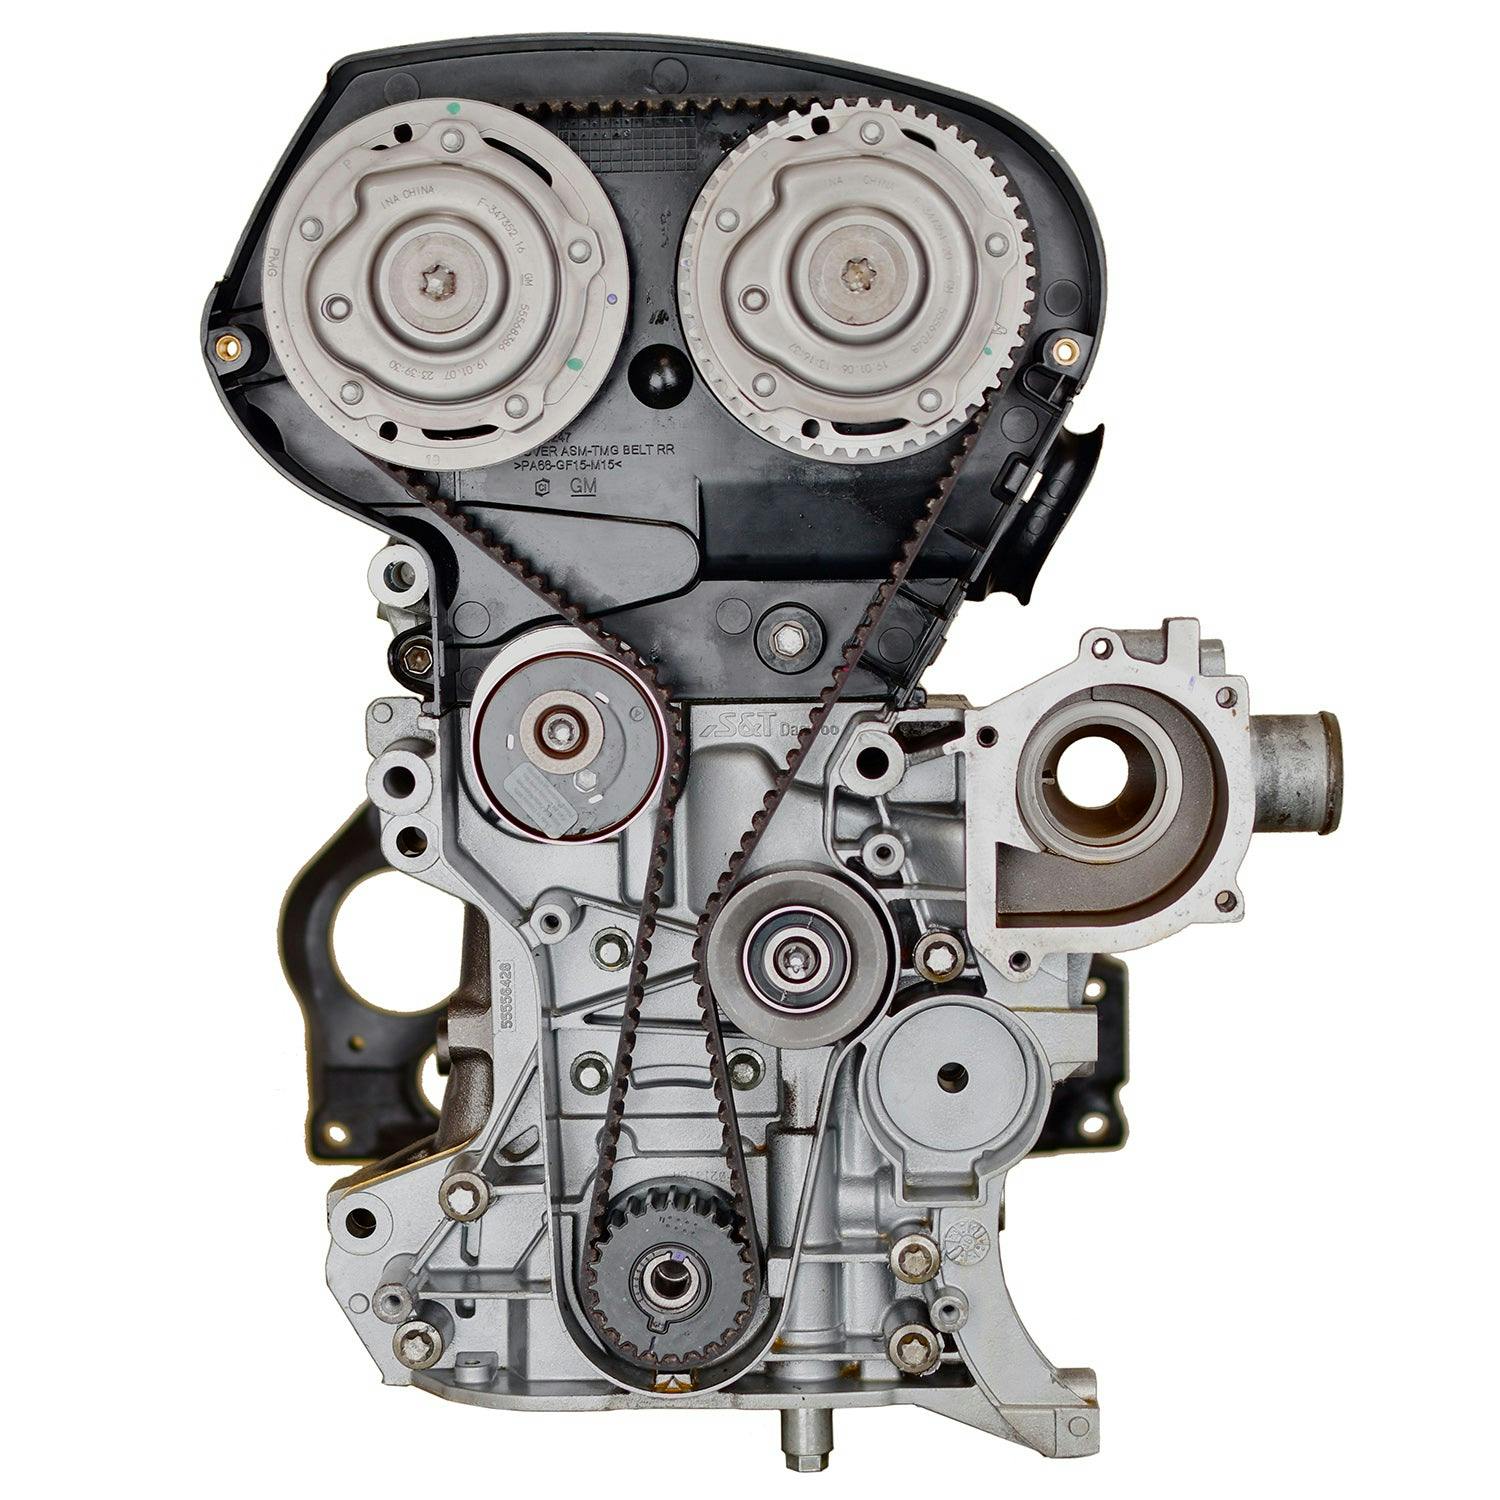 1.6L Inline-4 Engine for 2009-2011 Chevrolet Aveo, Aveo5/Pontiac G3, G3 Wave